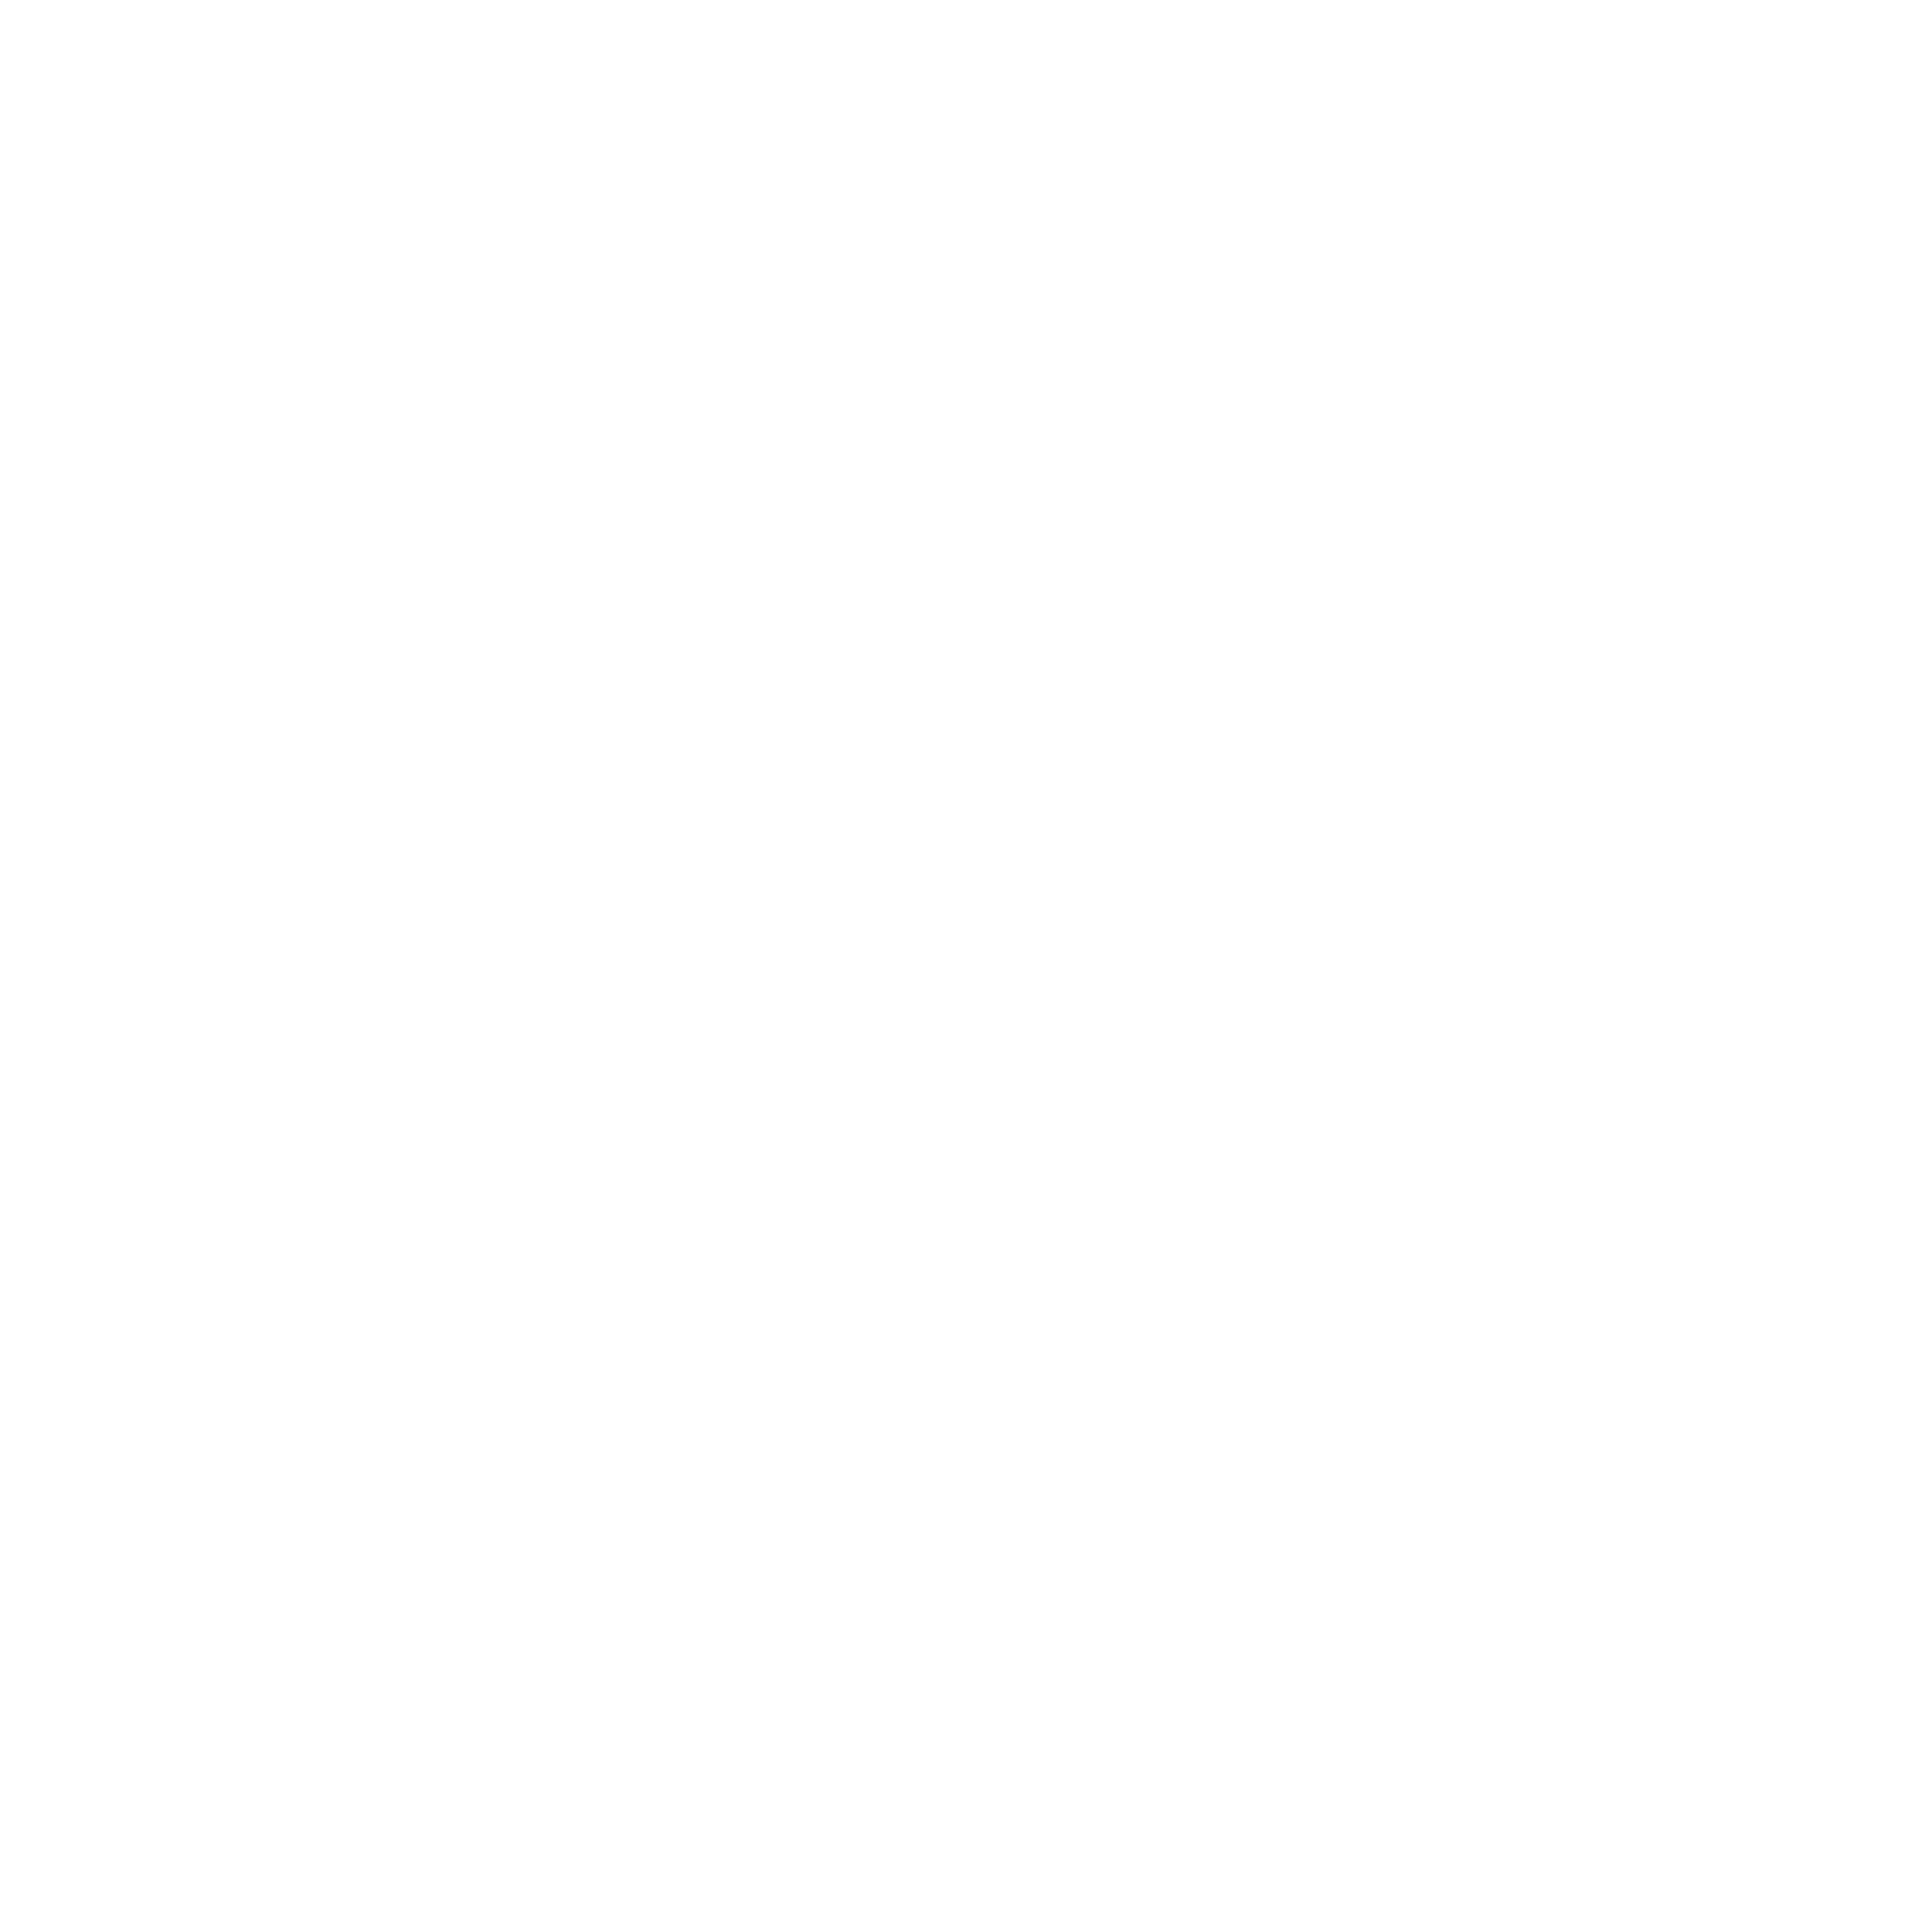 Tgon's Travels